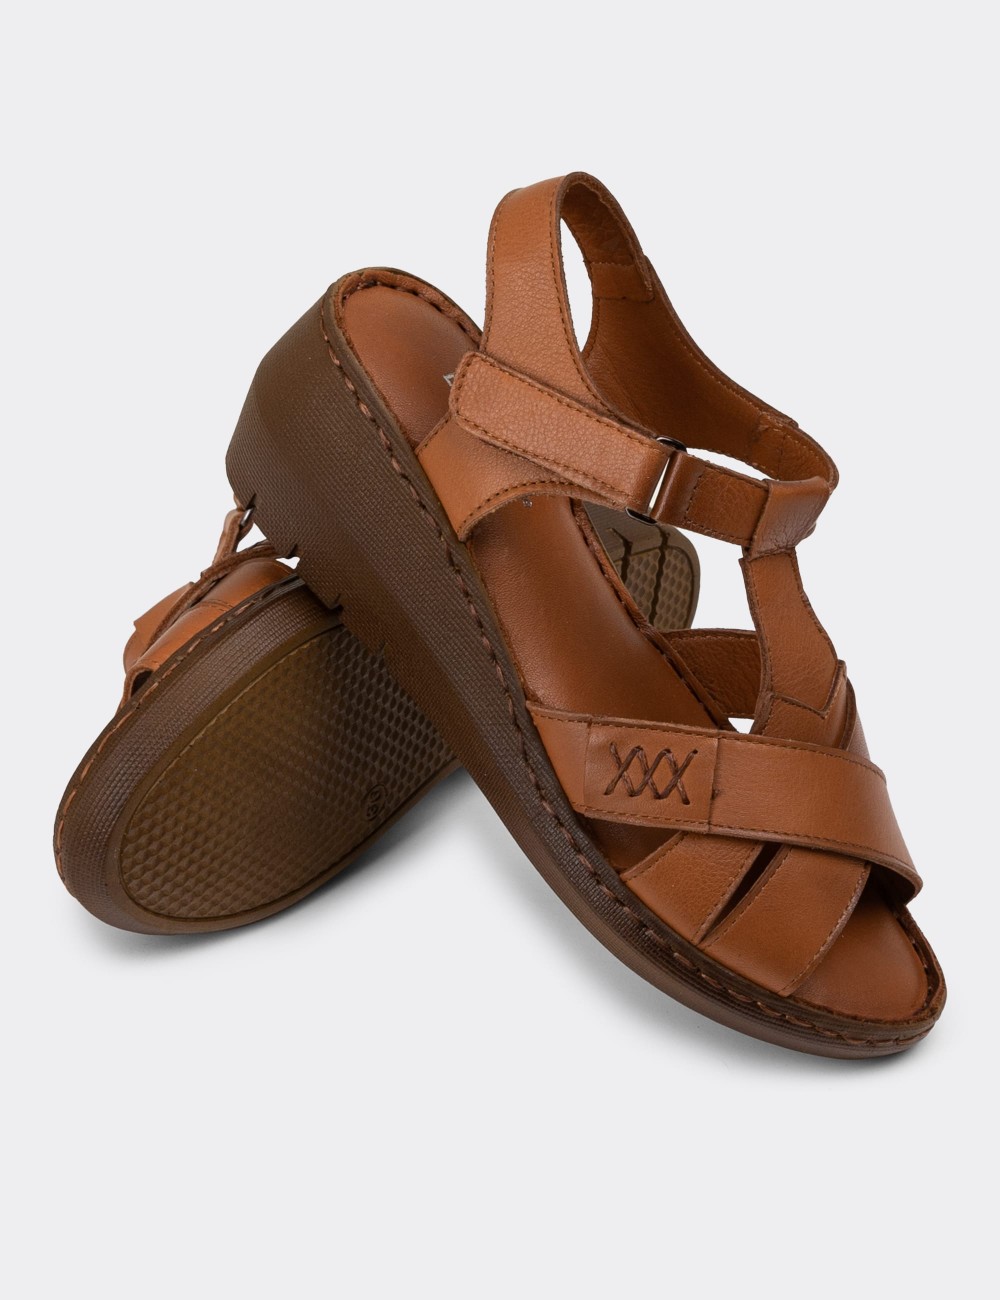 Tan Leather Sandals - SE111ZTBAC01